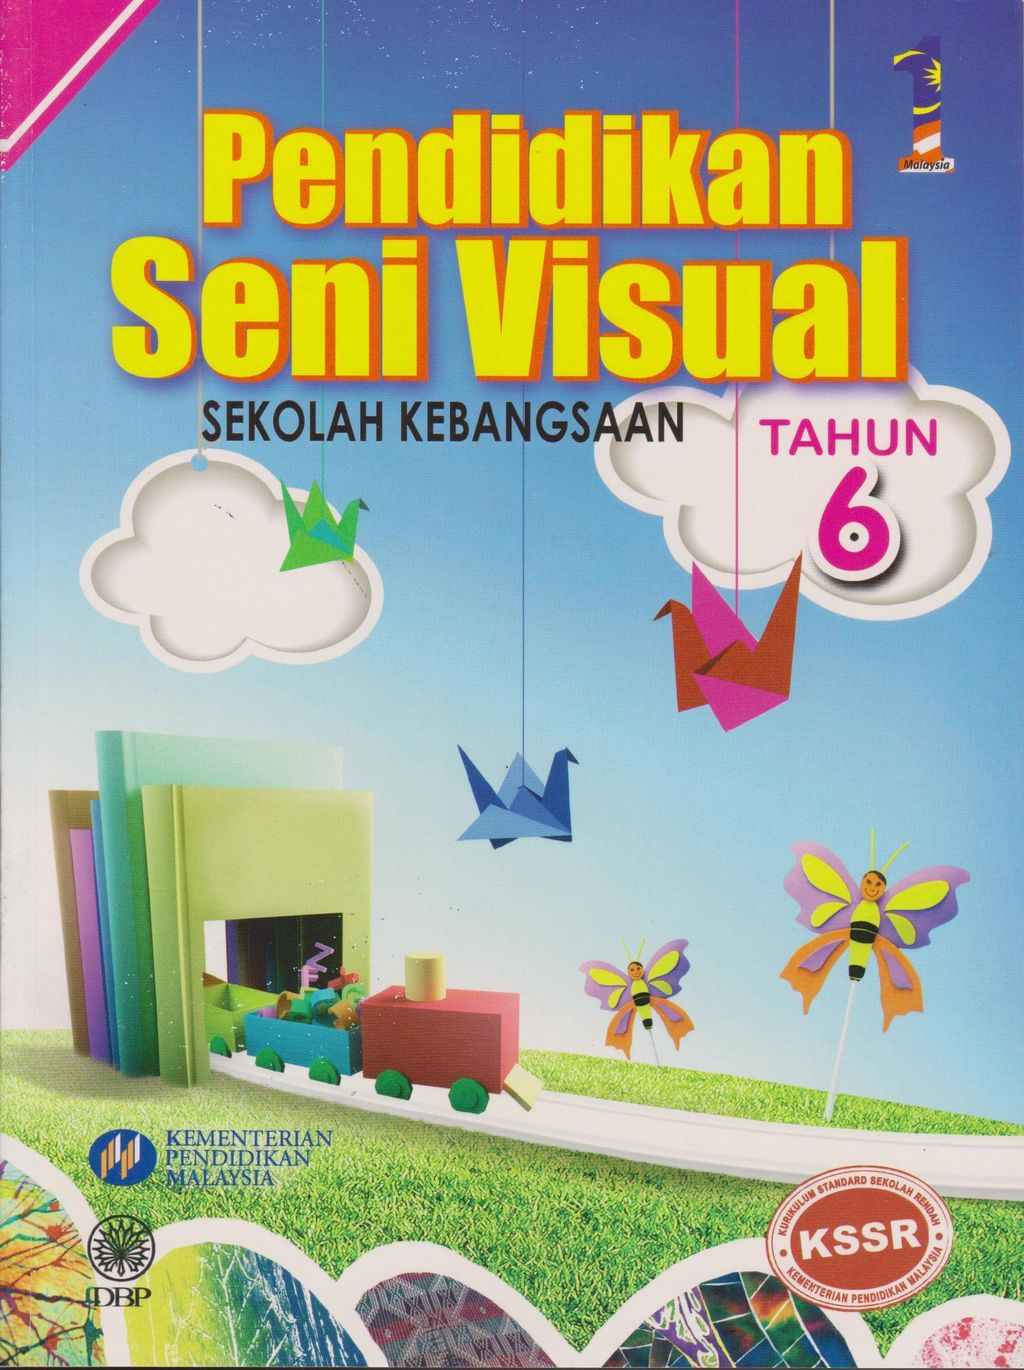 Pendidikan Seni Visual Tahun 6 – Pustaka Mukmin KL  Malaysia's Online